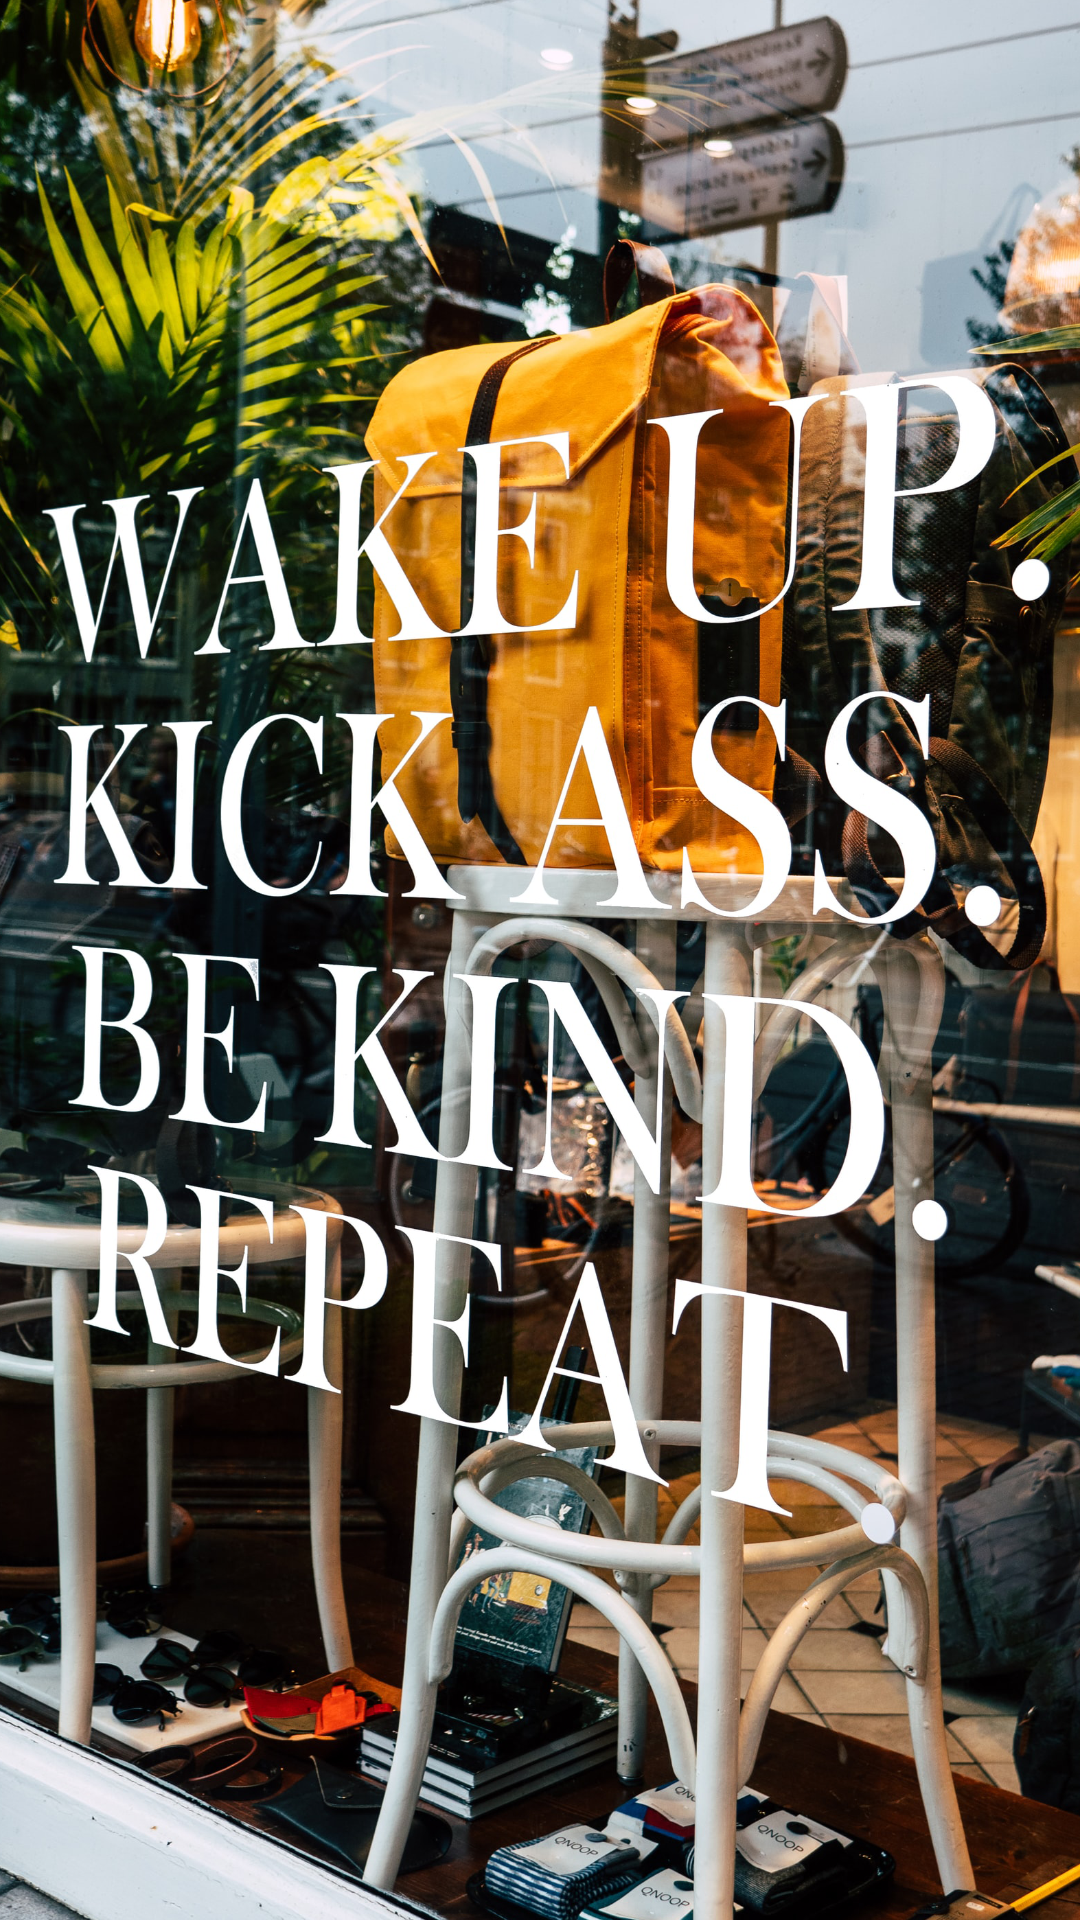 Wake up.
Kick ass.
Be kind.
Repeat.

[Svegliati.
Tira calci nel sedere.
Sii gentile.
Ripeti.]